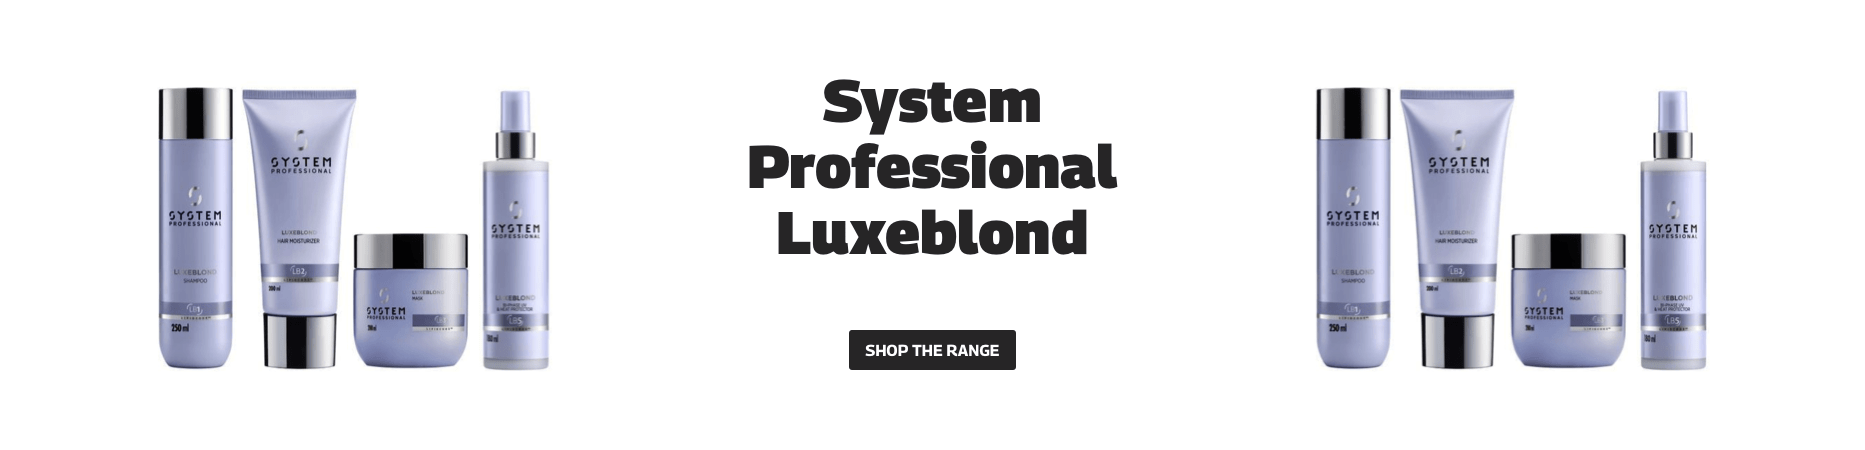 System Professional Luxeblond